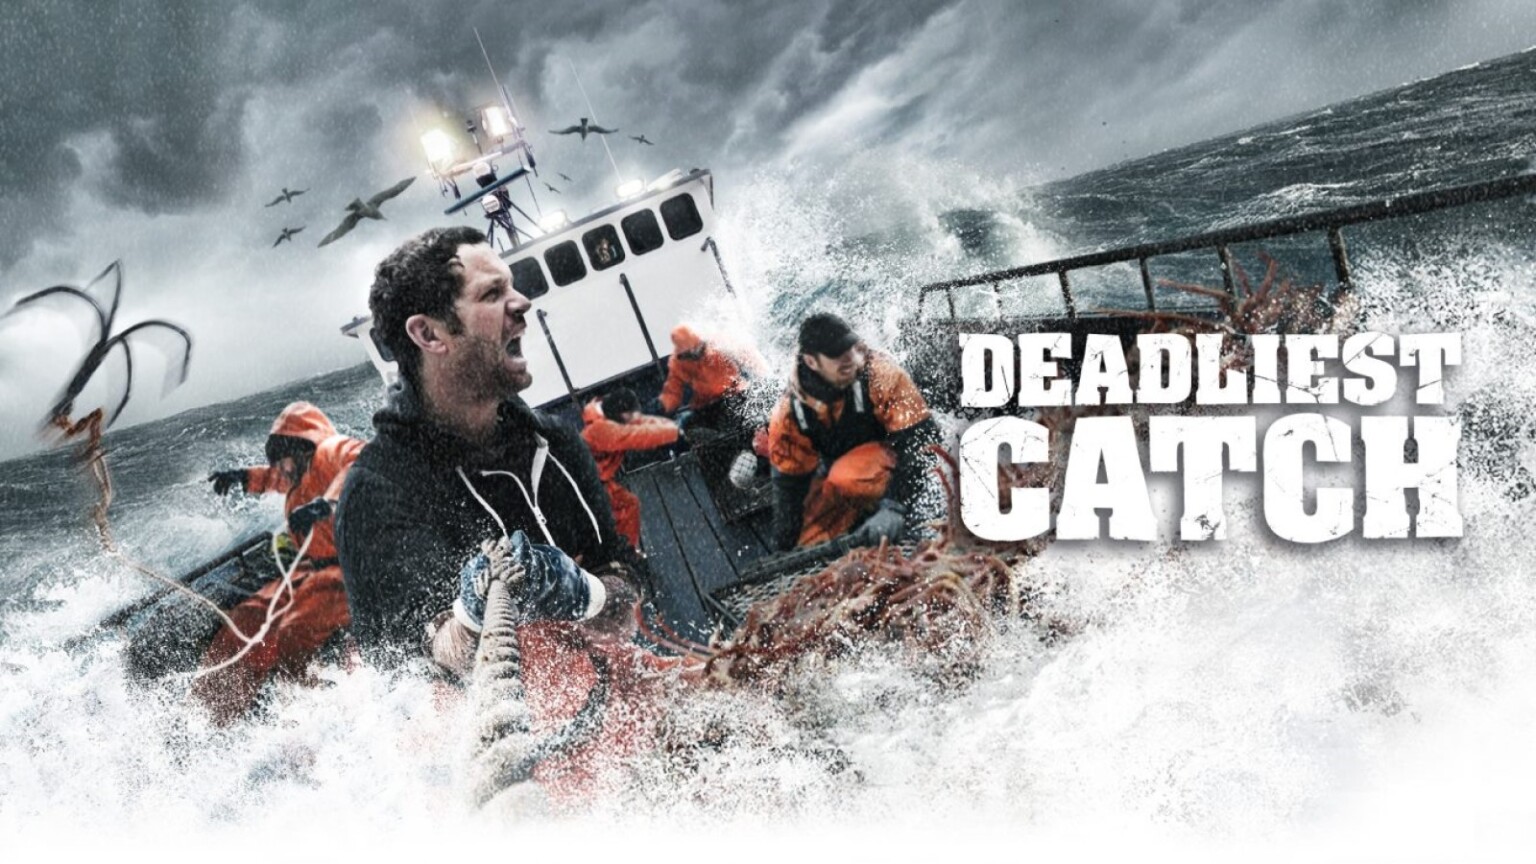 How to Watch 'Deadliest Catch' Online Live Stream Season 16